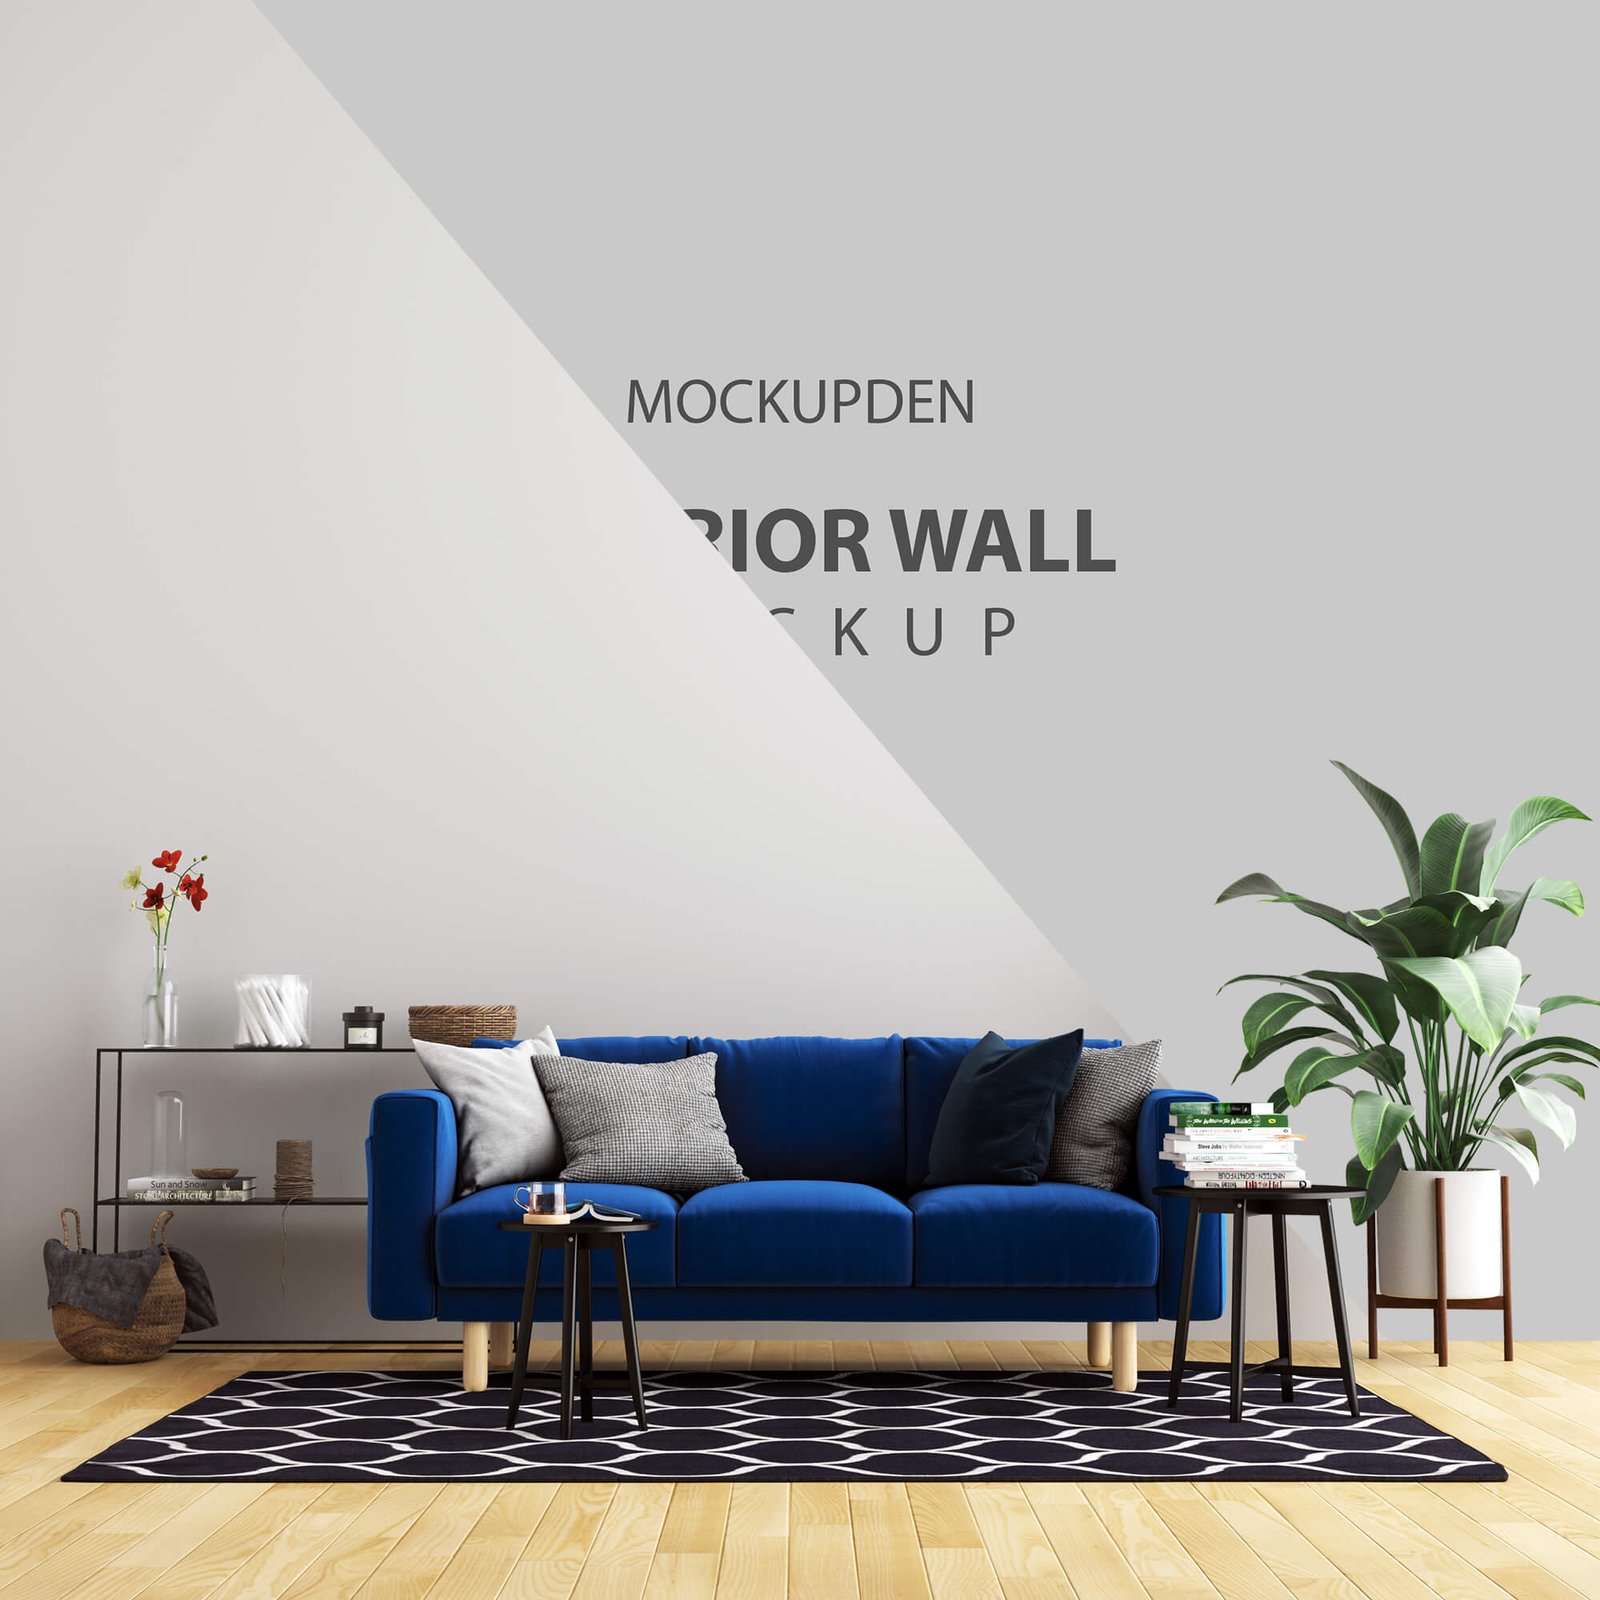 Free Interior Wall Mockup PSD Template - Mockup Den